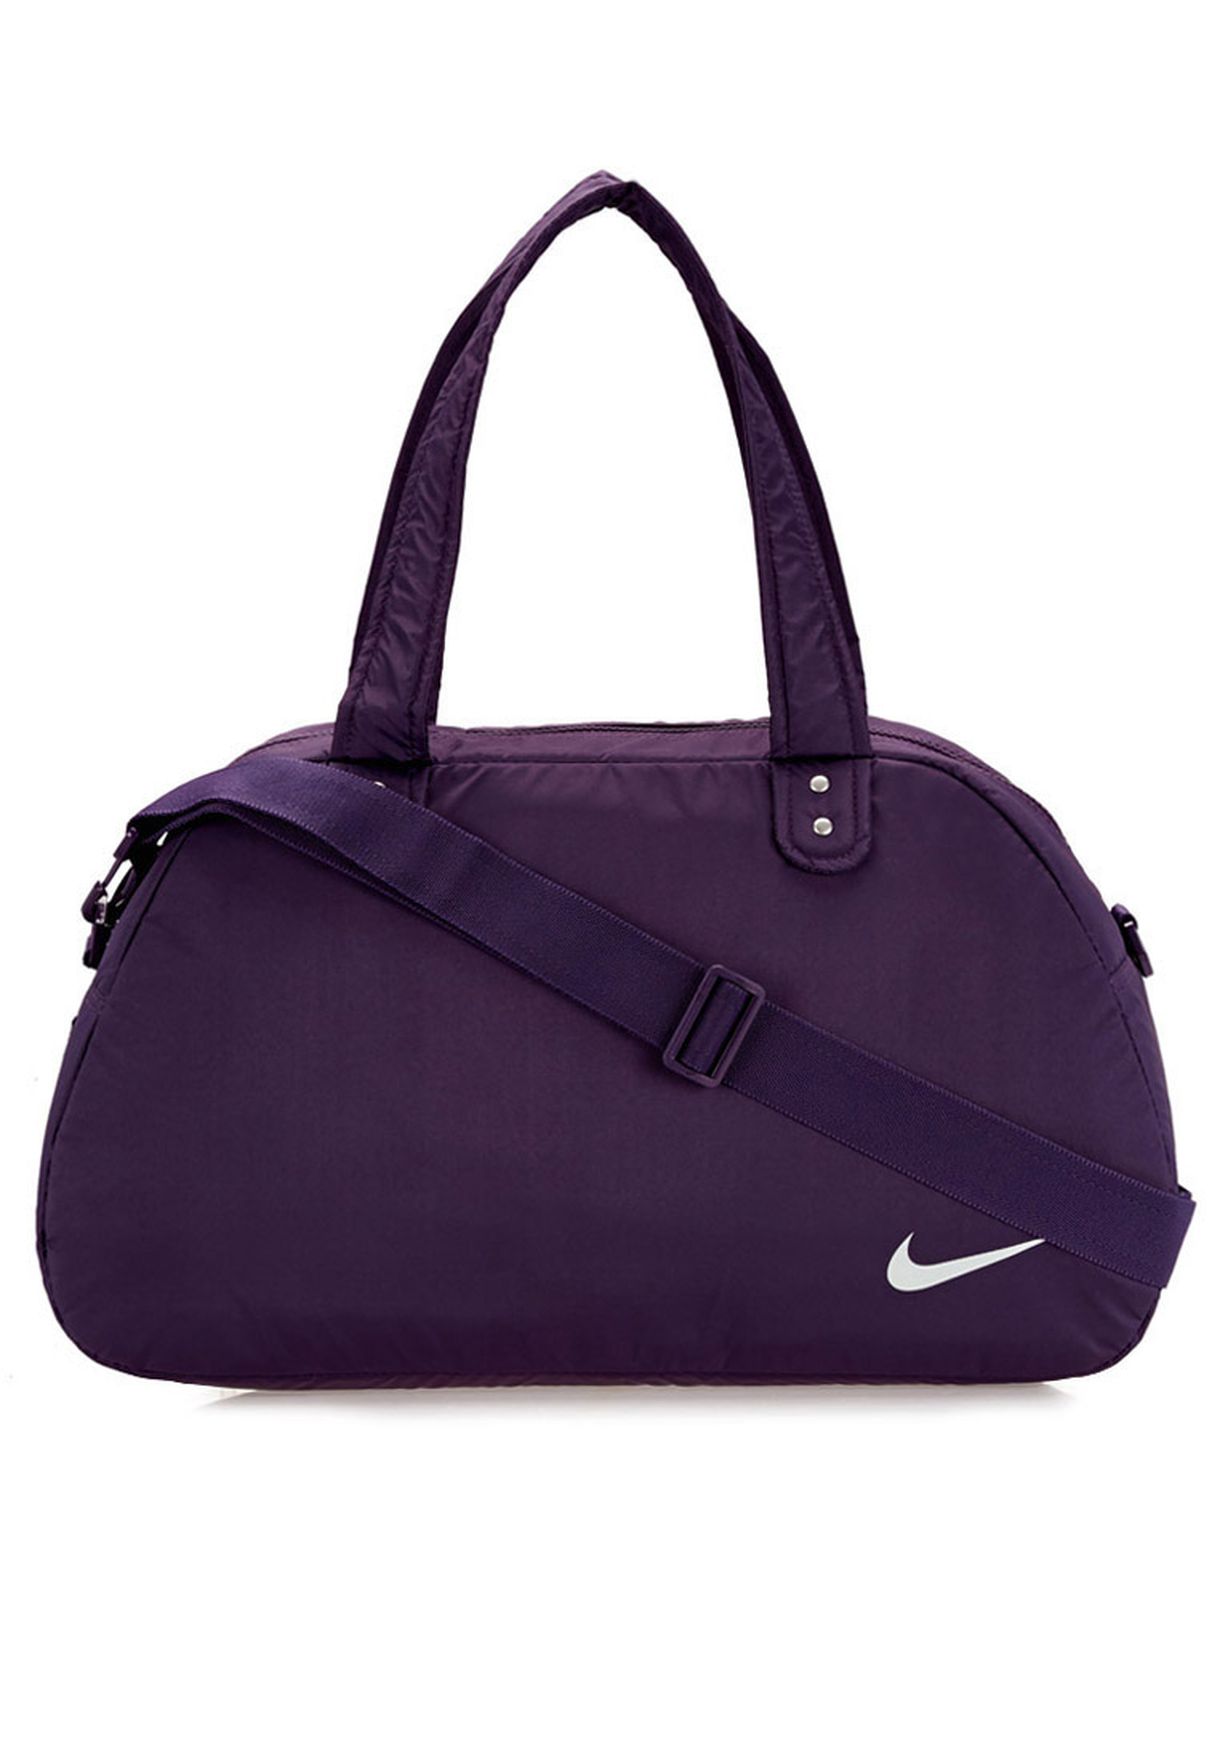 purple nike duffle bag